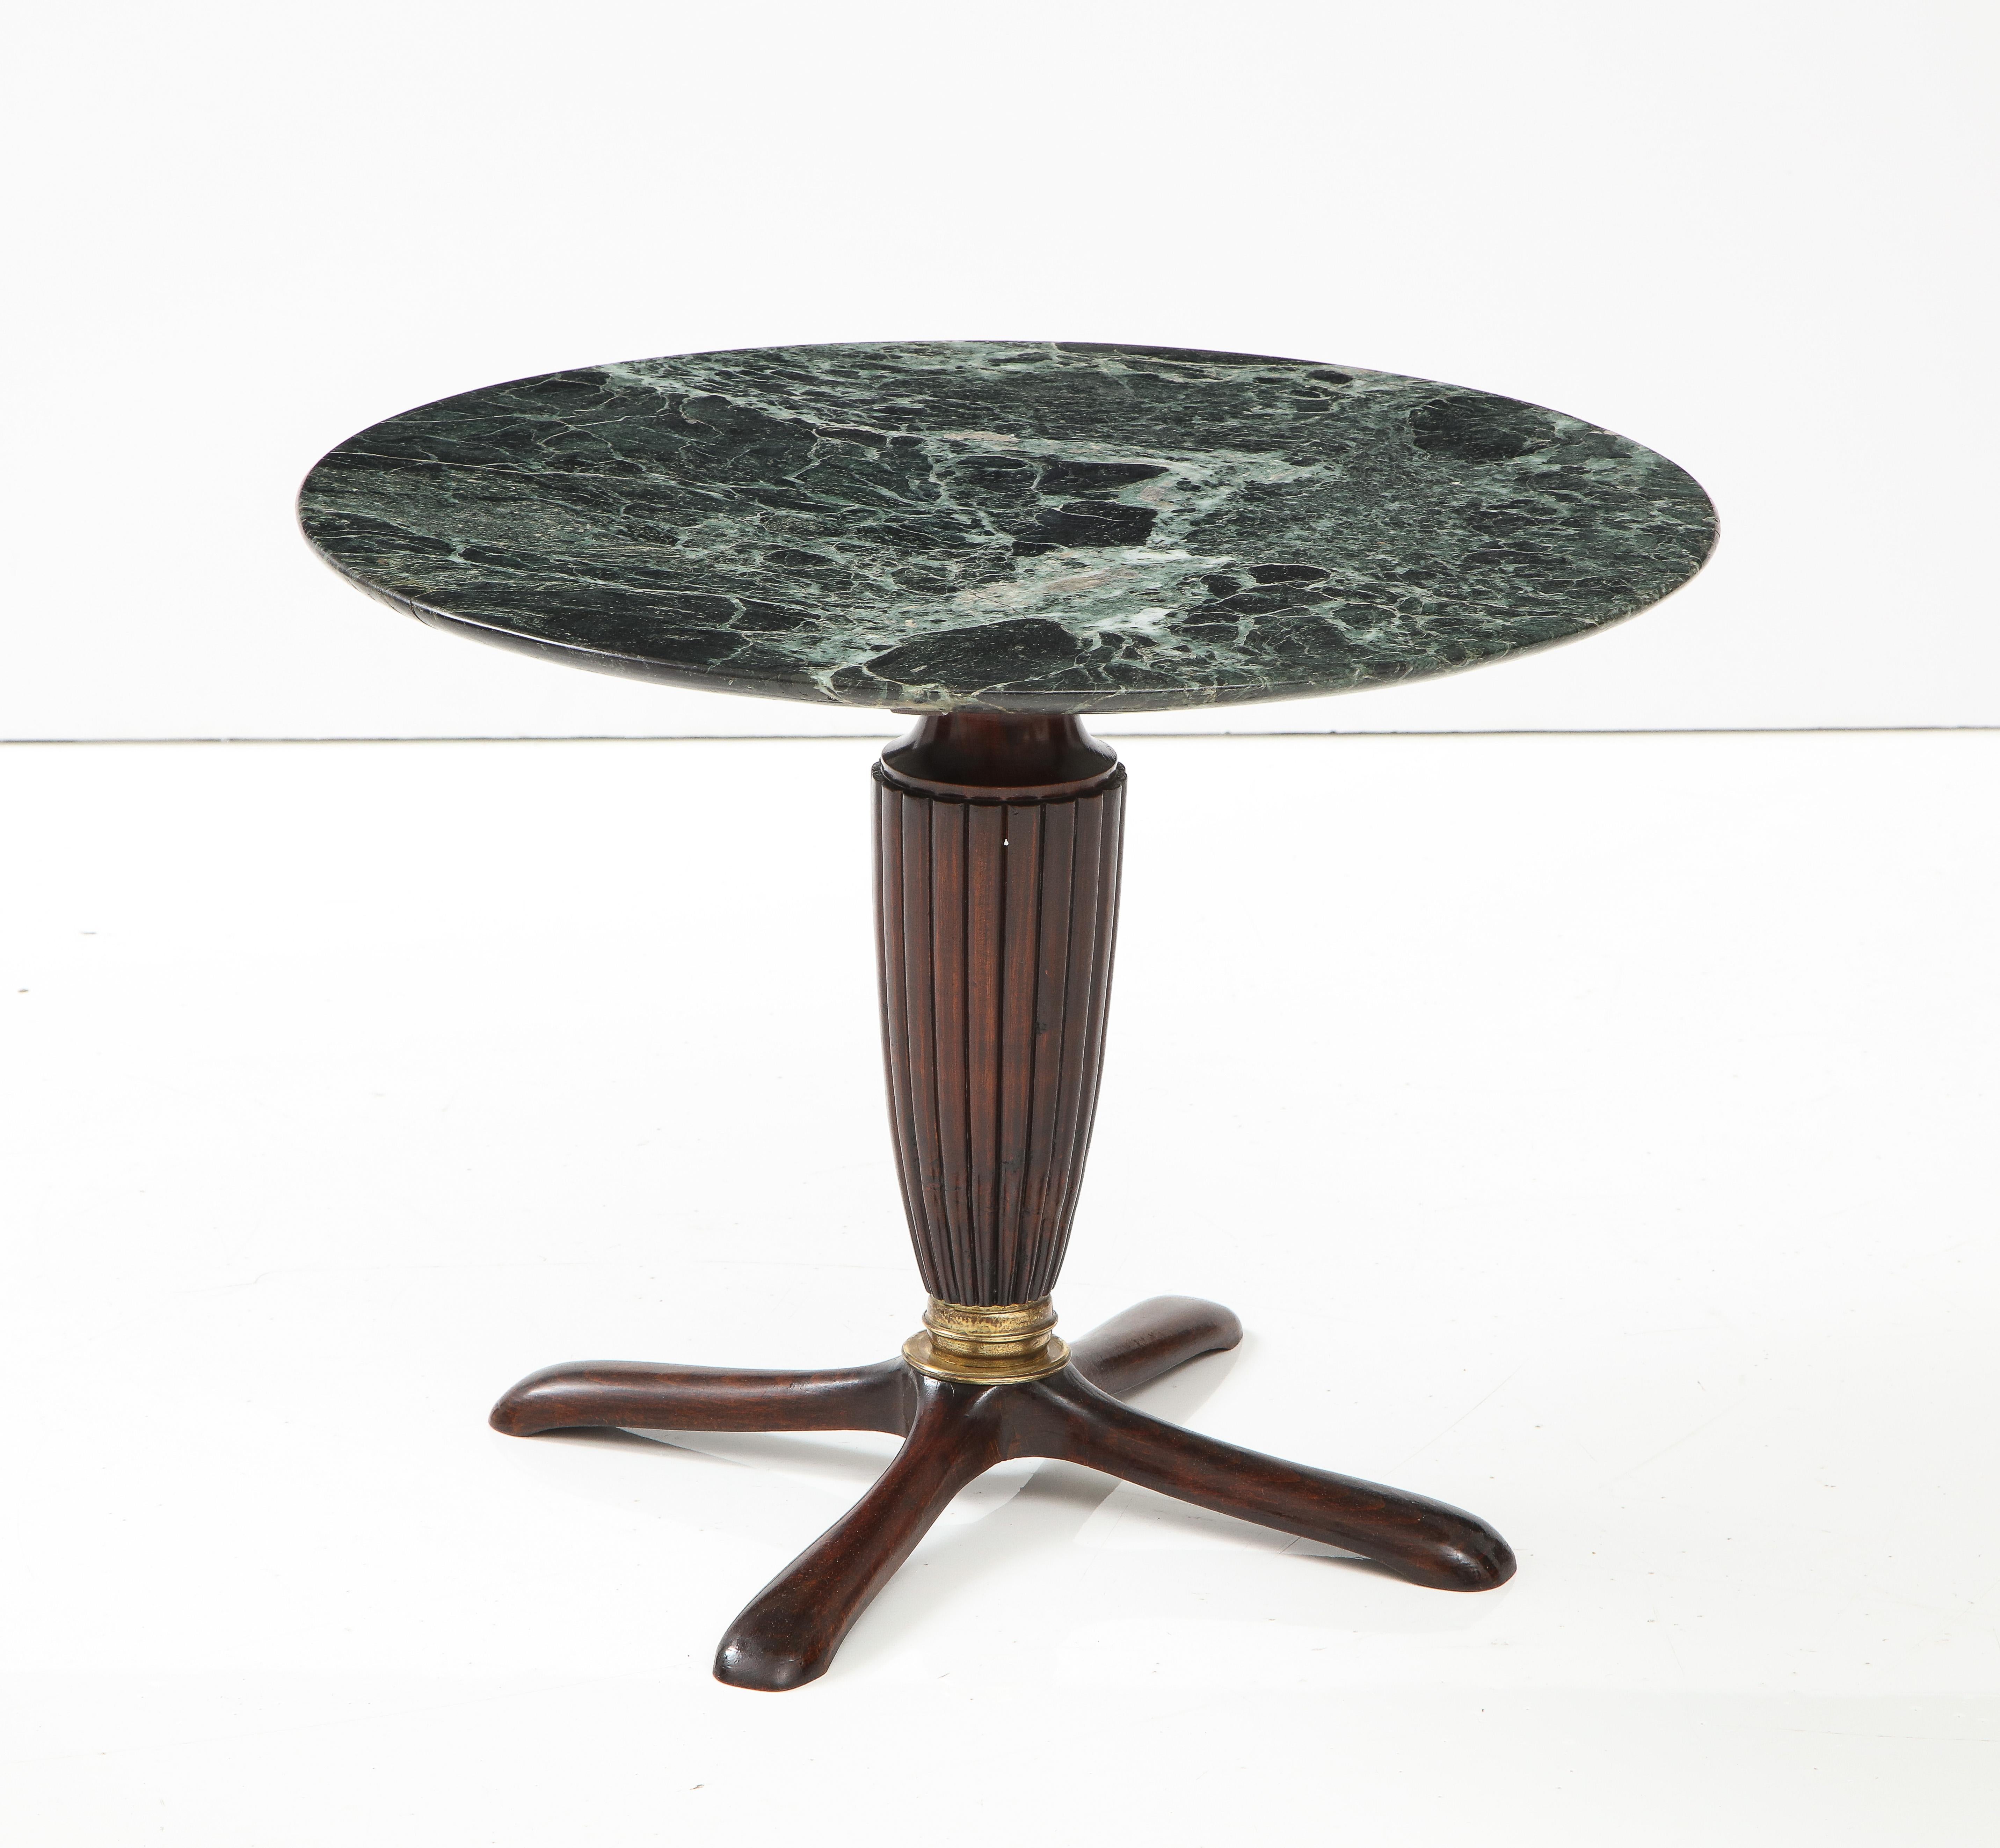 Italian Mahogany Circular Side Table with Verdi Alpi Marble Top, 1940's For Sale 4